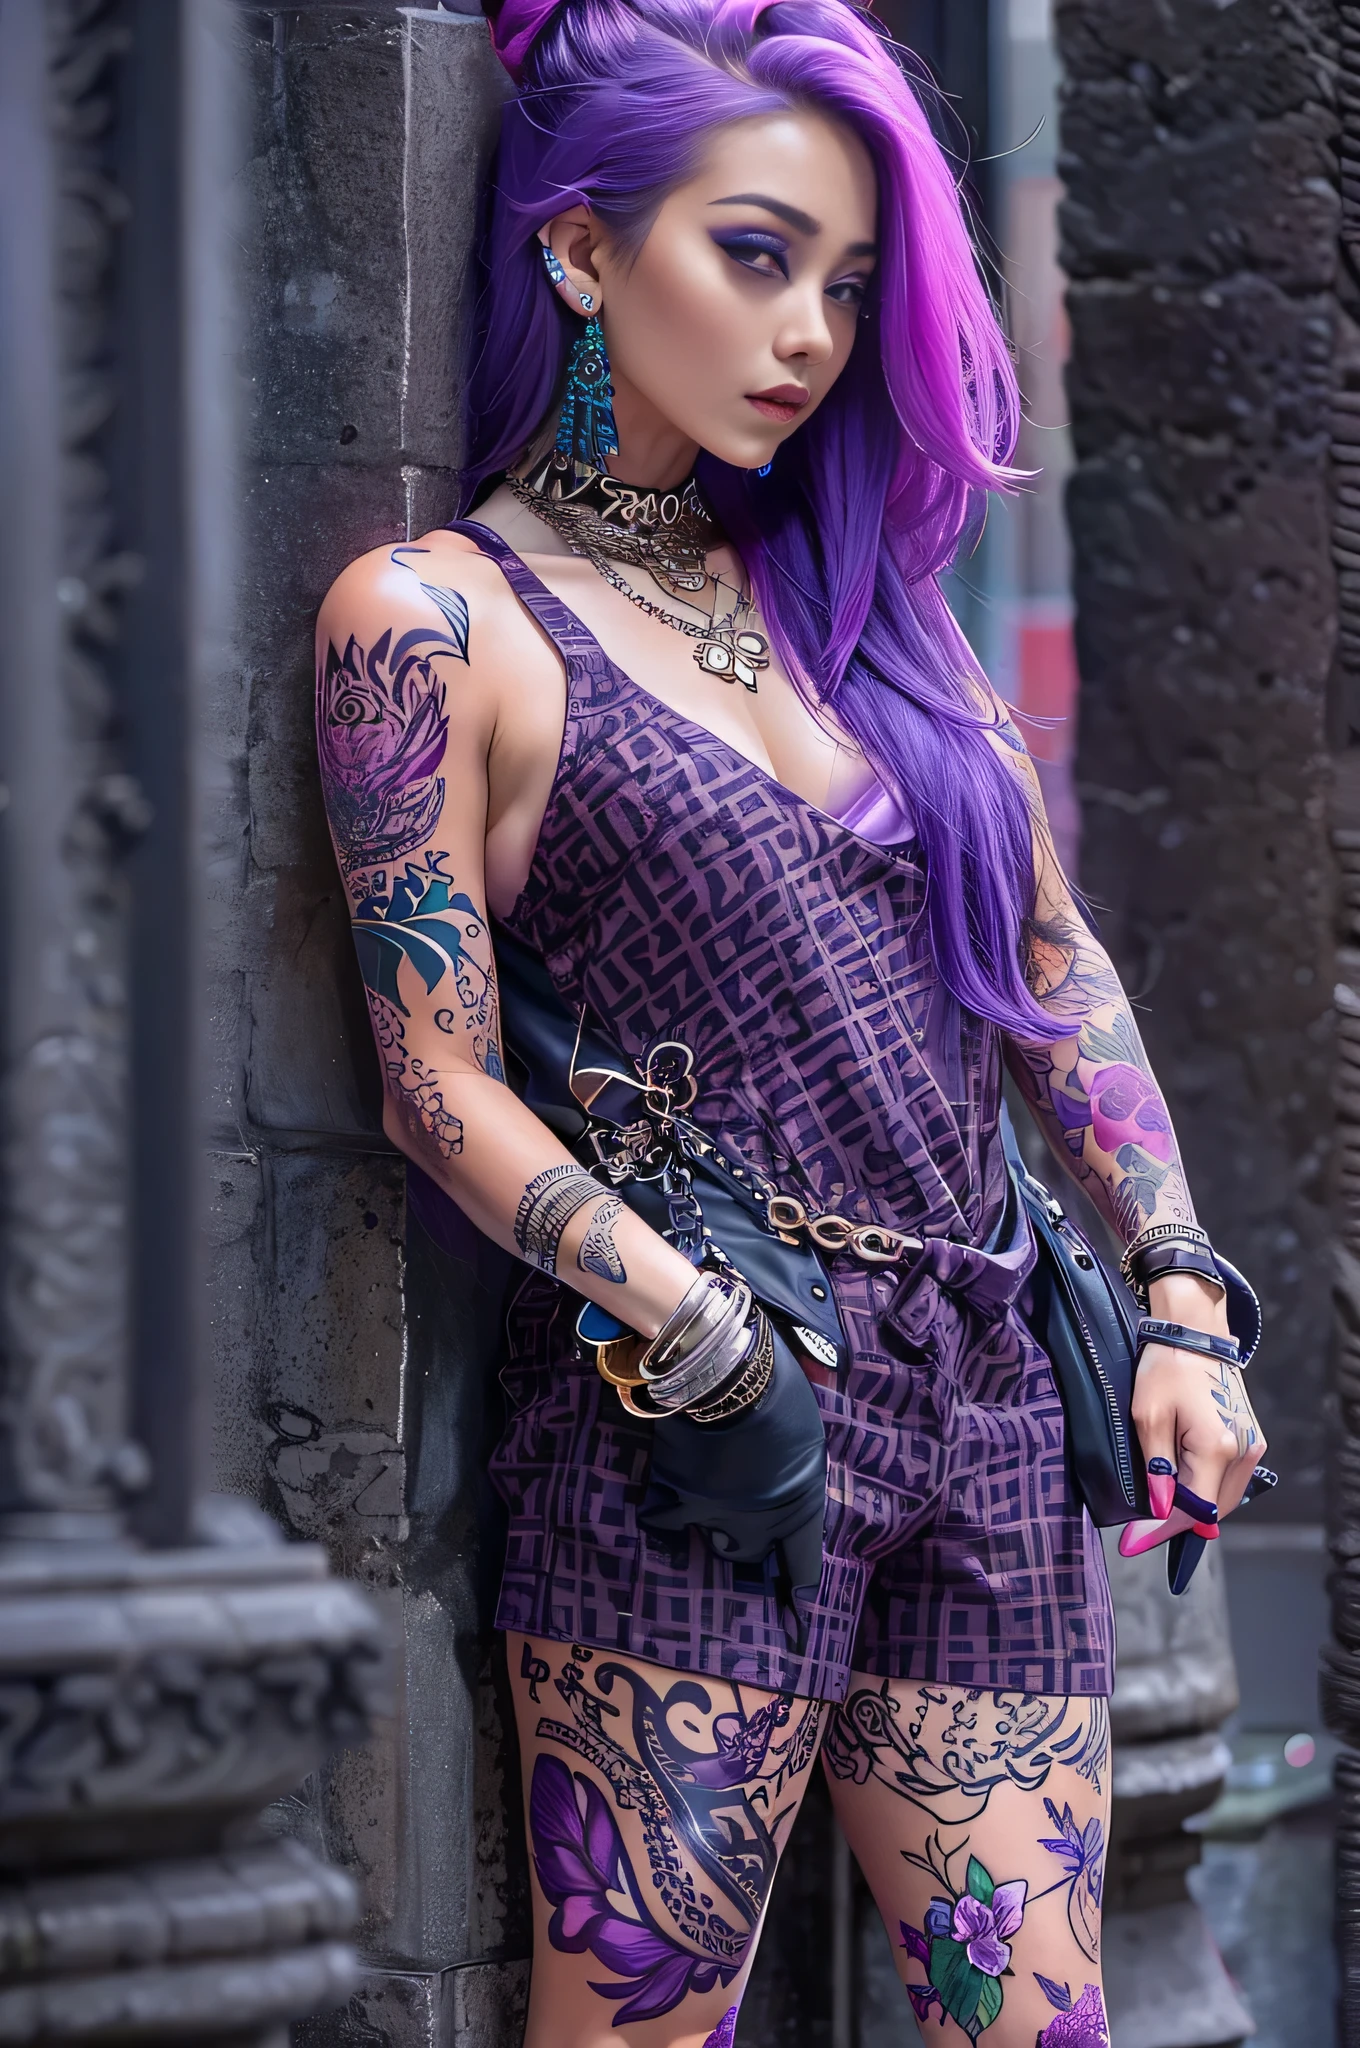 1 atemberaubende Frau, Helle Haut, inneres violett gefärbtes Haar,  Tätowierung am Arm, Piercing, Straßenmode,